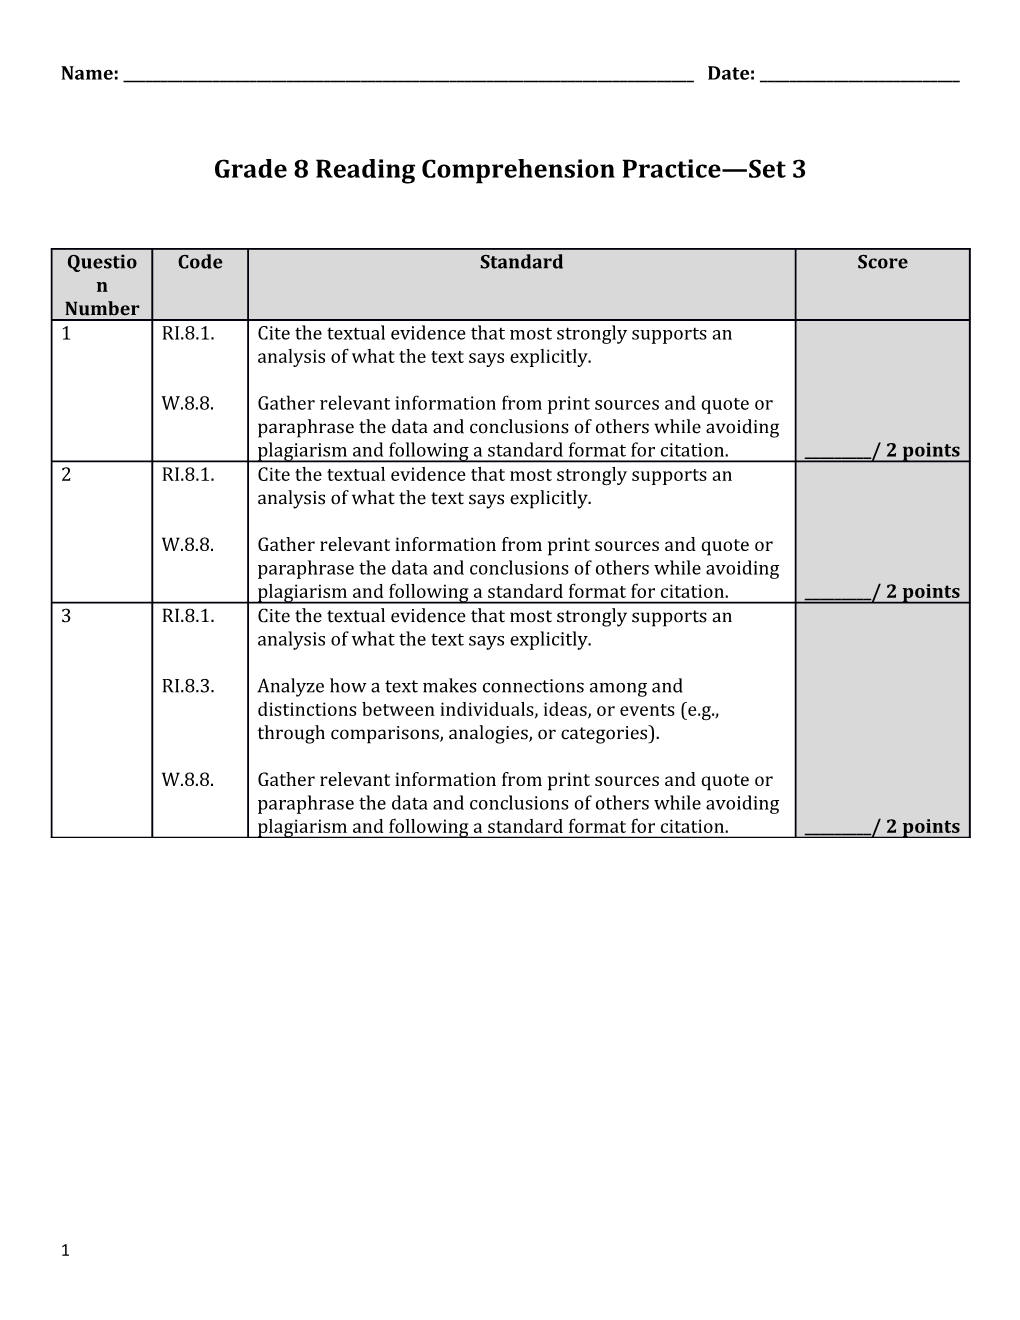 Grade 8 Reading Comprehension Practice Set 3